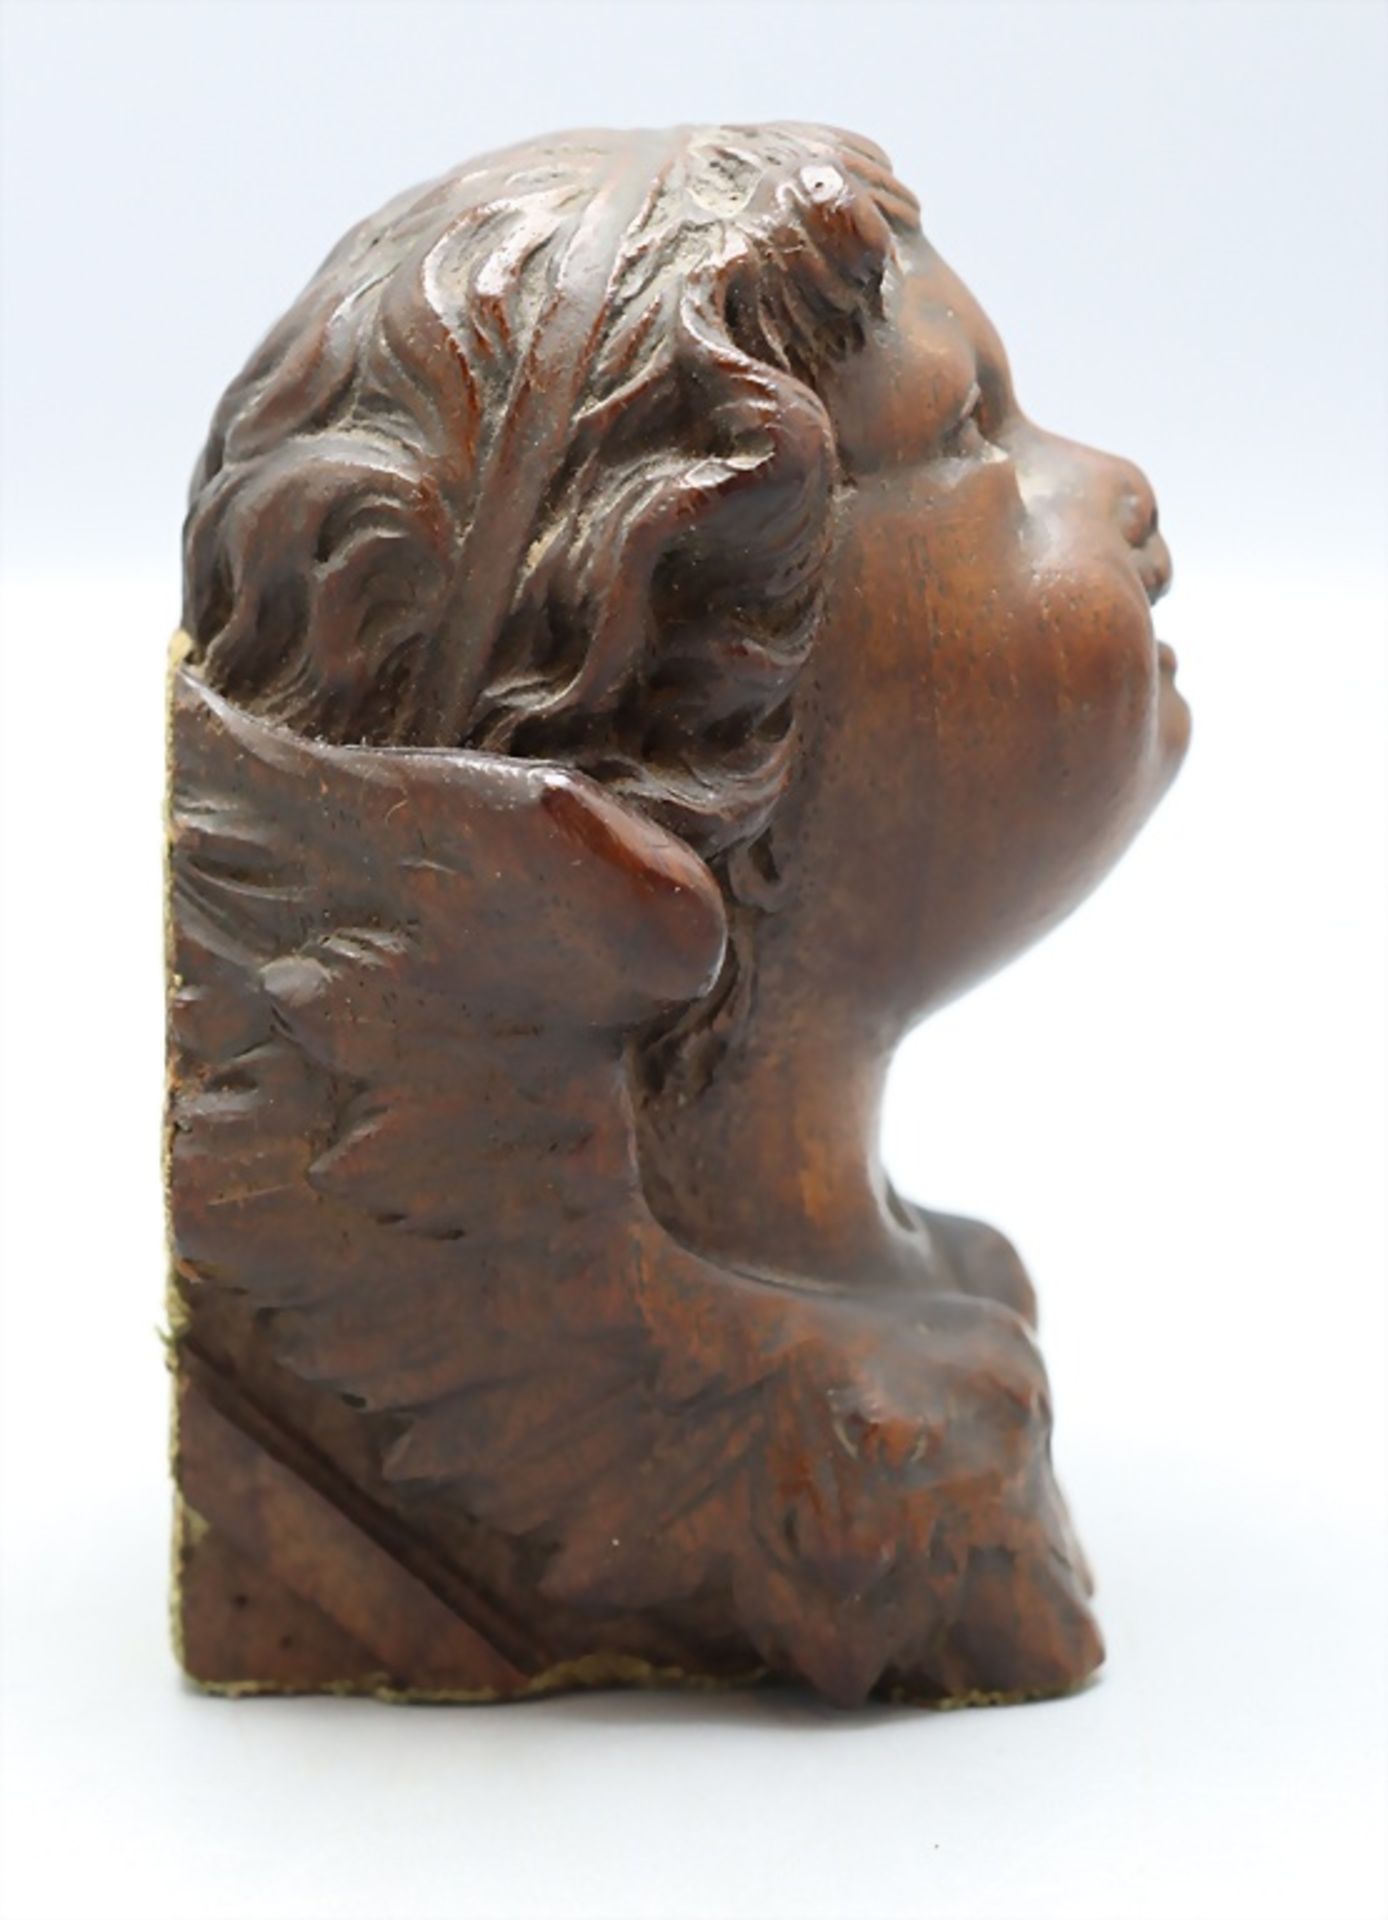 Holz Applike 'Geflügelter Engelskopf' / A wooden head of a winged cherub, 18. Jh. oder älter - Image 4 of 5